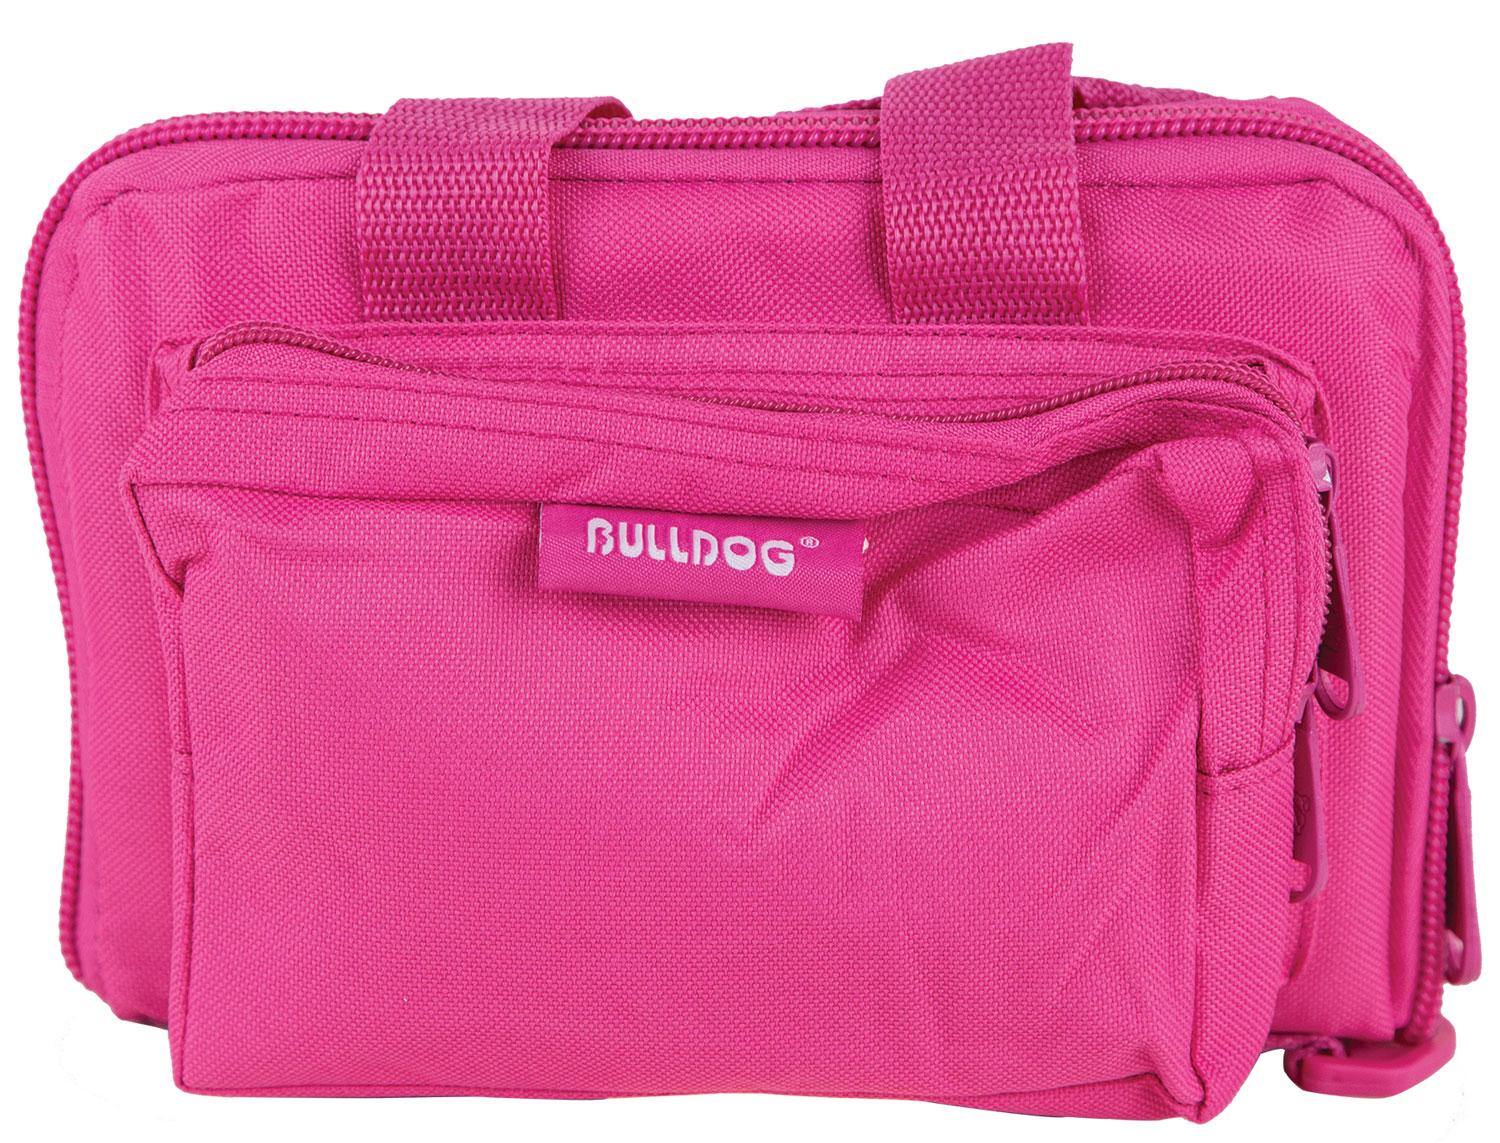  Bulldog X- Small Mini Range Bag Pink